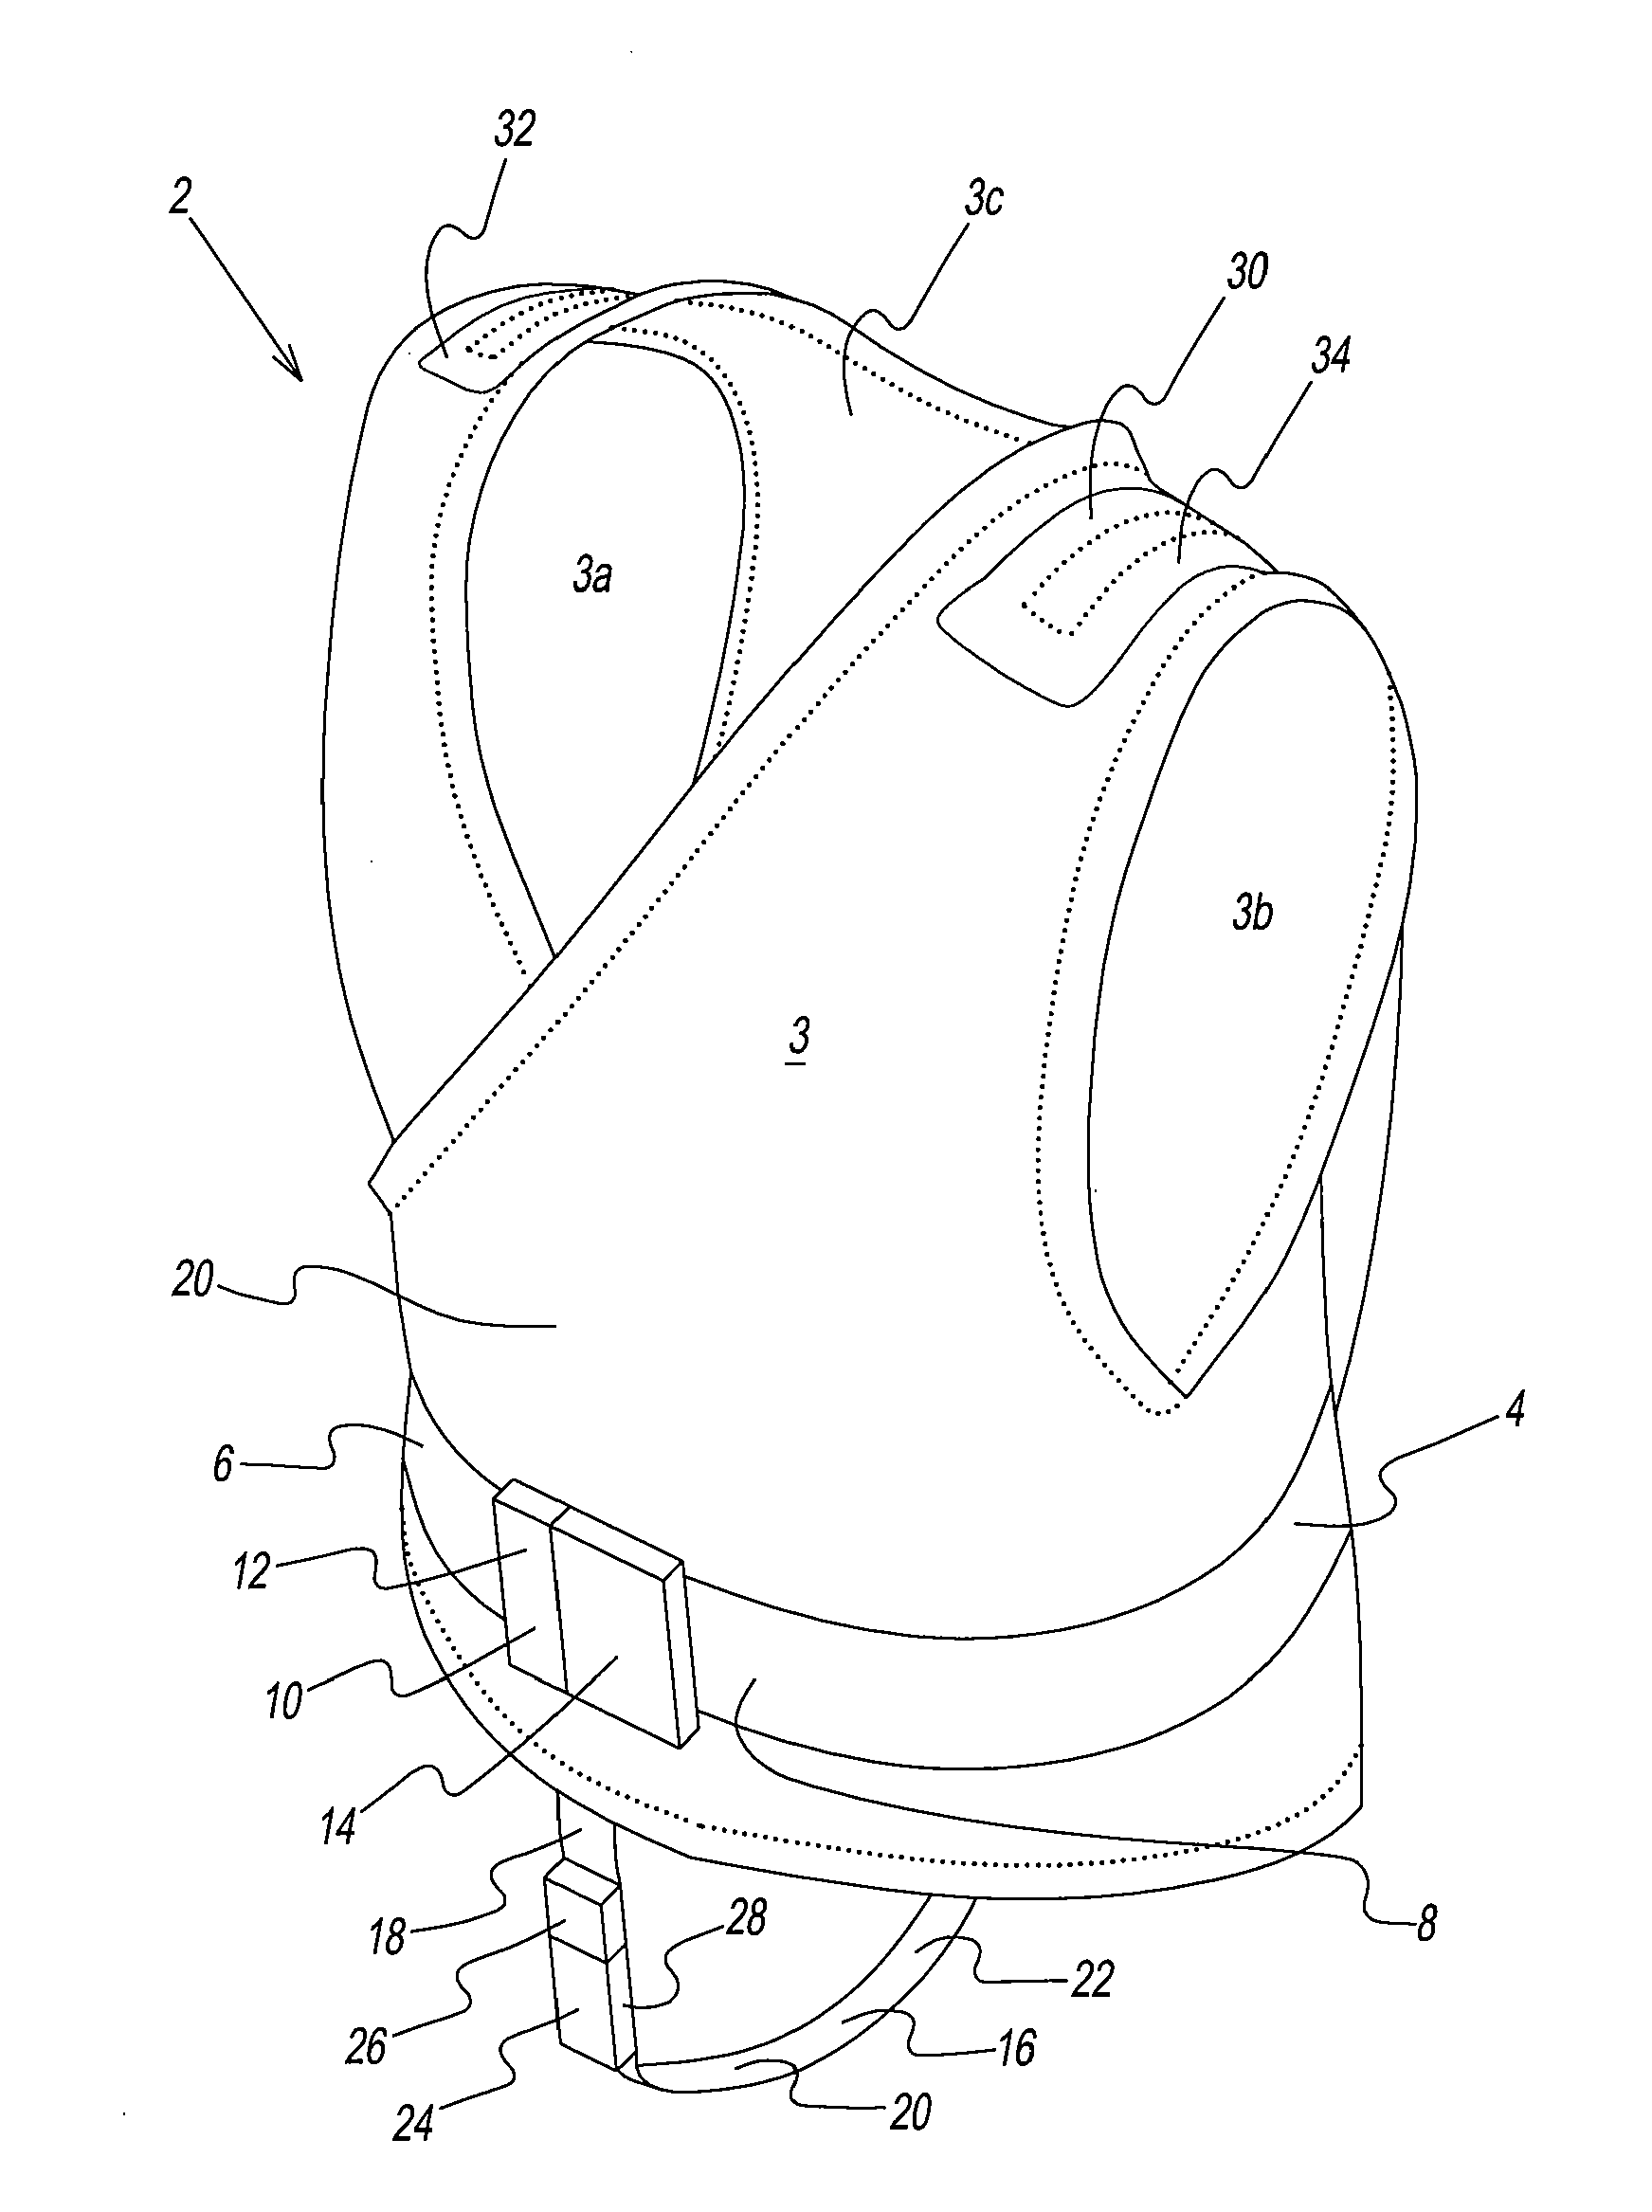 Portable restraining passenger safety vest for vehicles